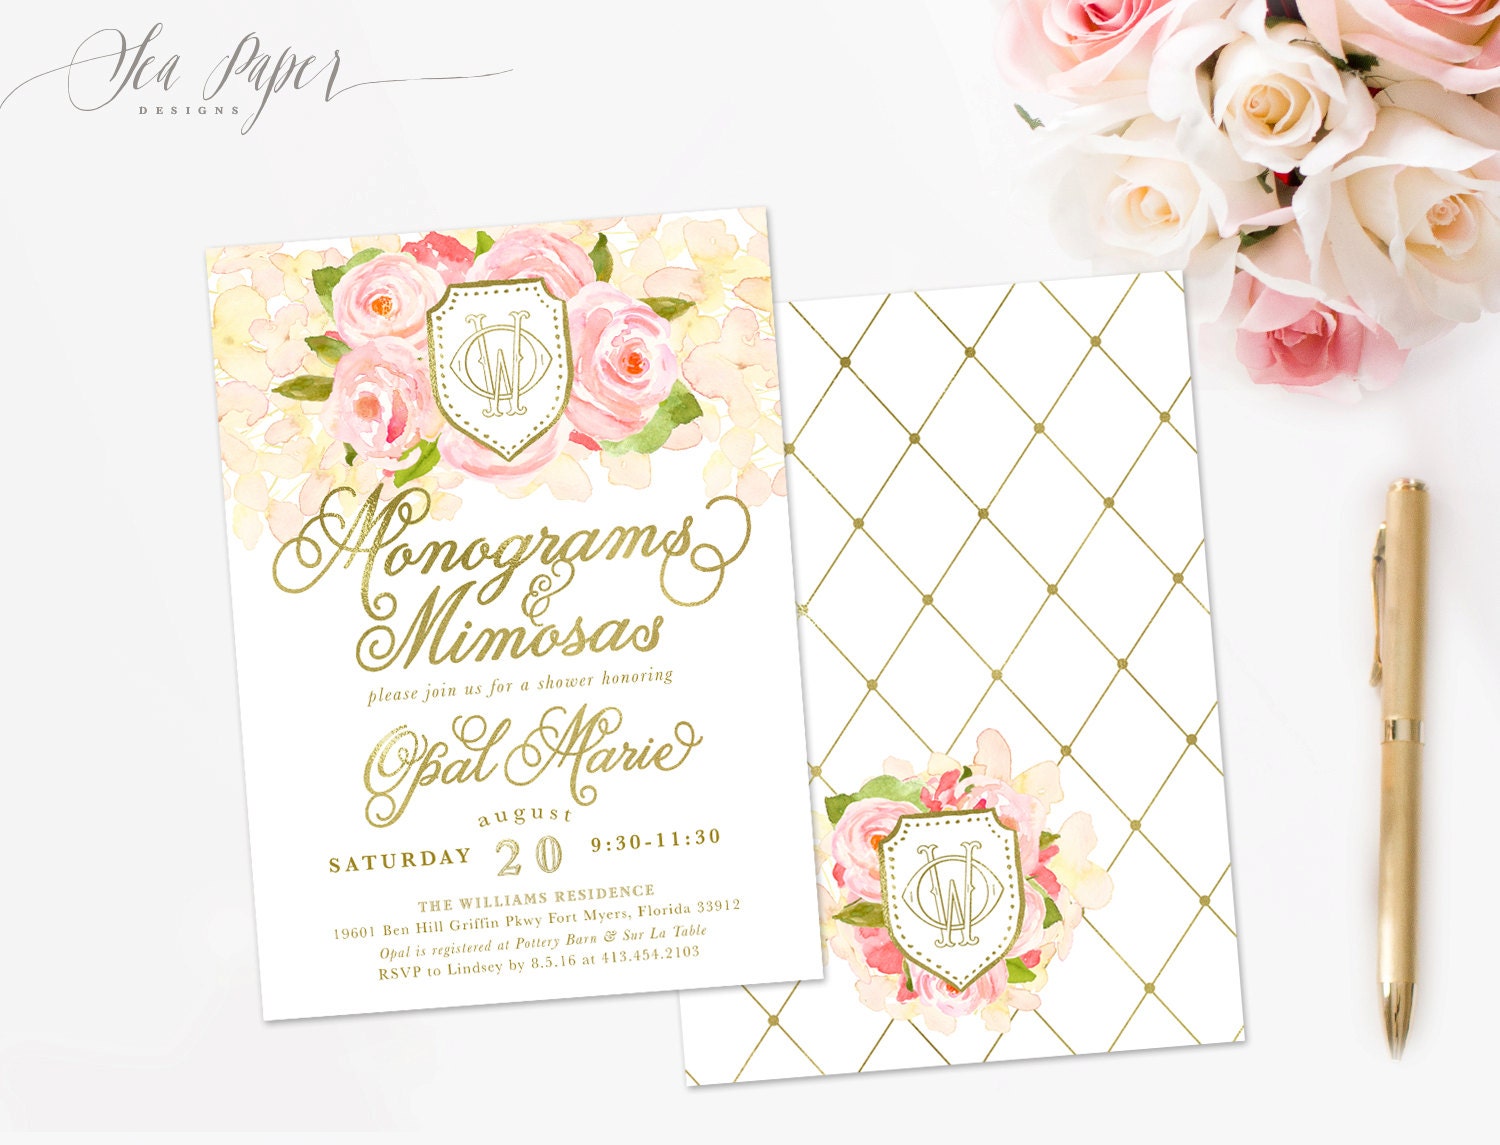 Monograms & Mimosas Bridal Shower Invitation Monogram Invite Roses, Hydrangeas Southern Invite, Digital Or Printed - Opal